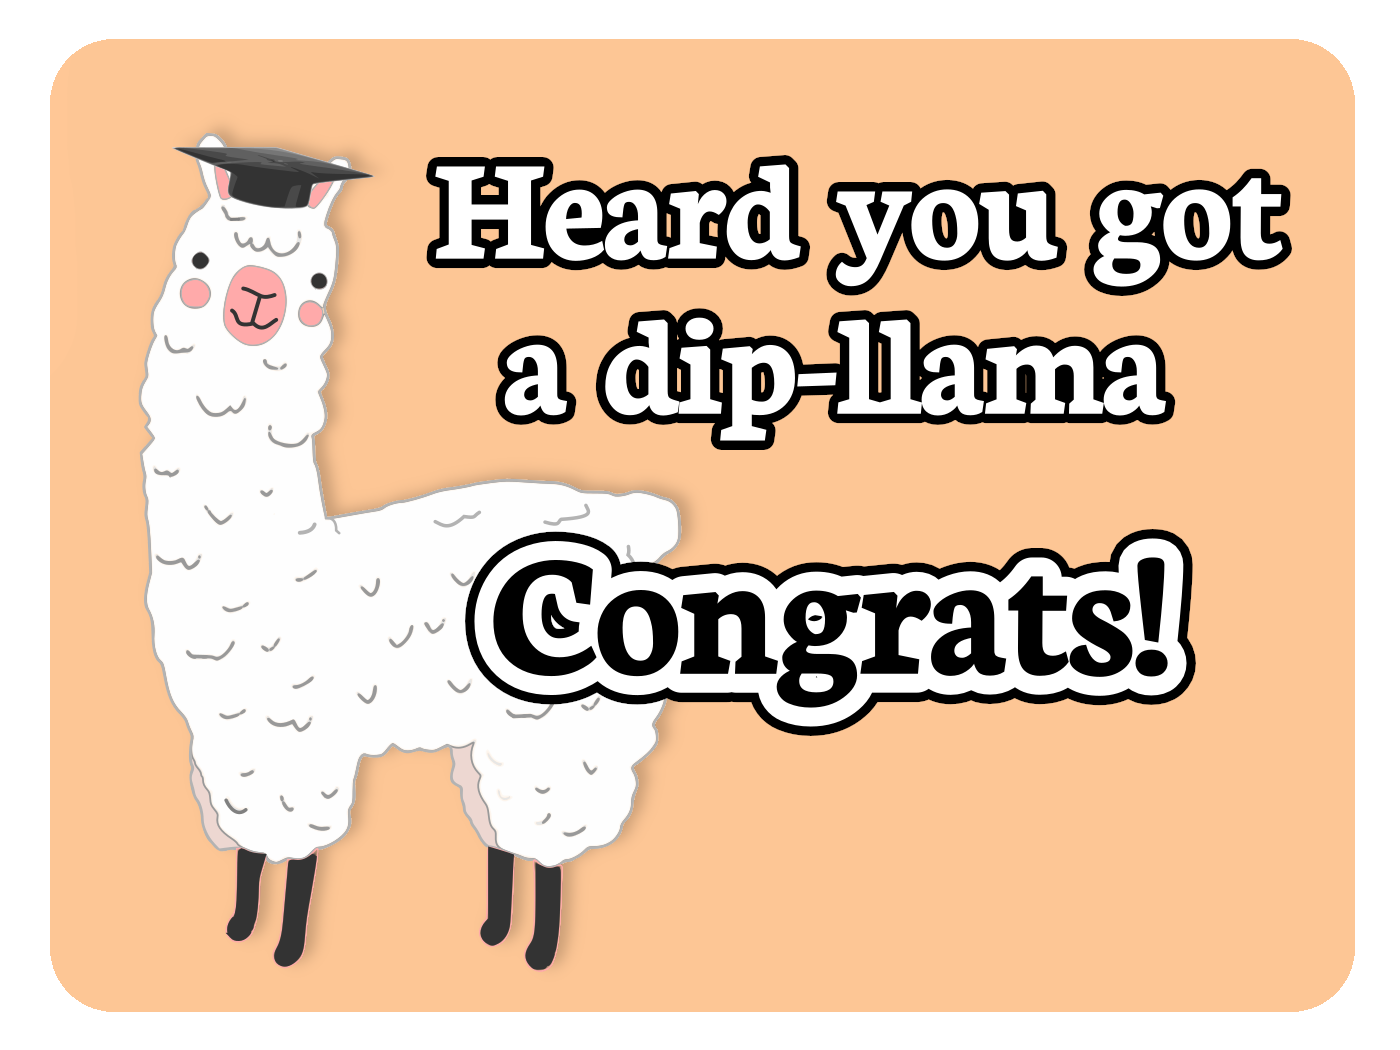 Got a Dip-Llama